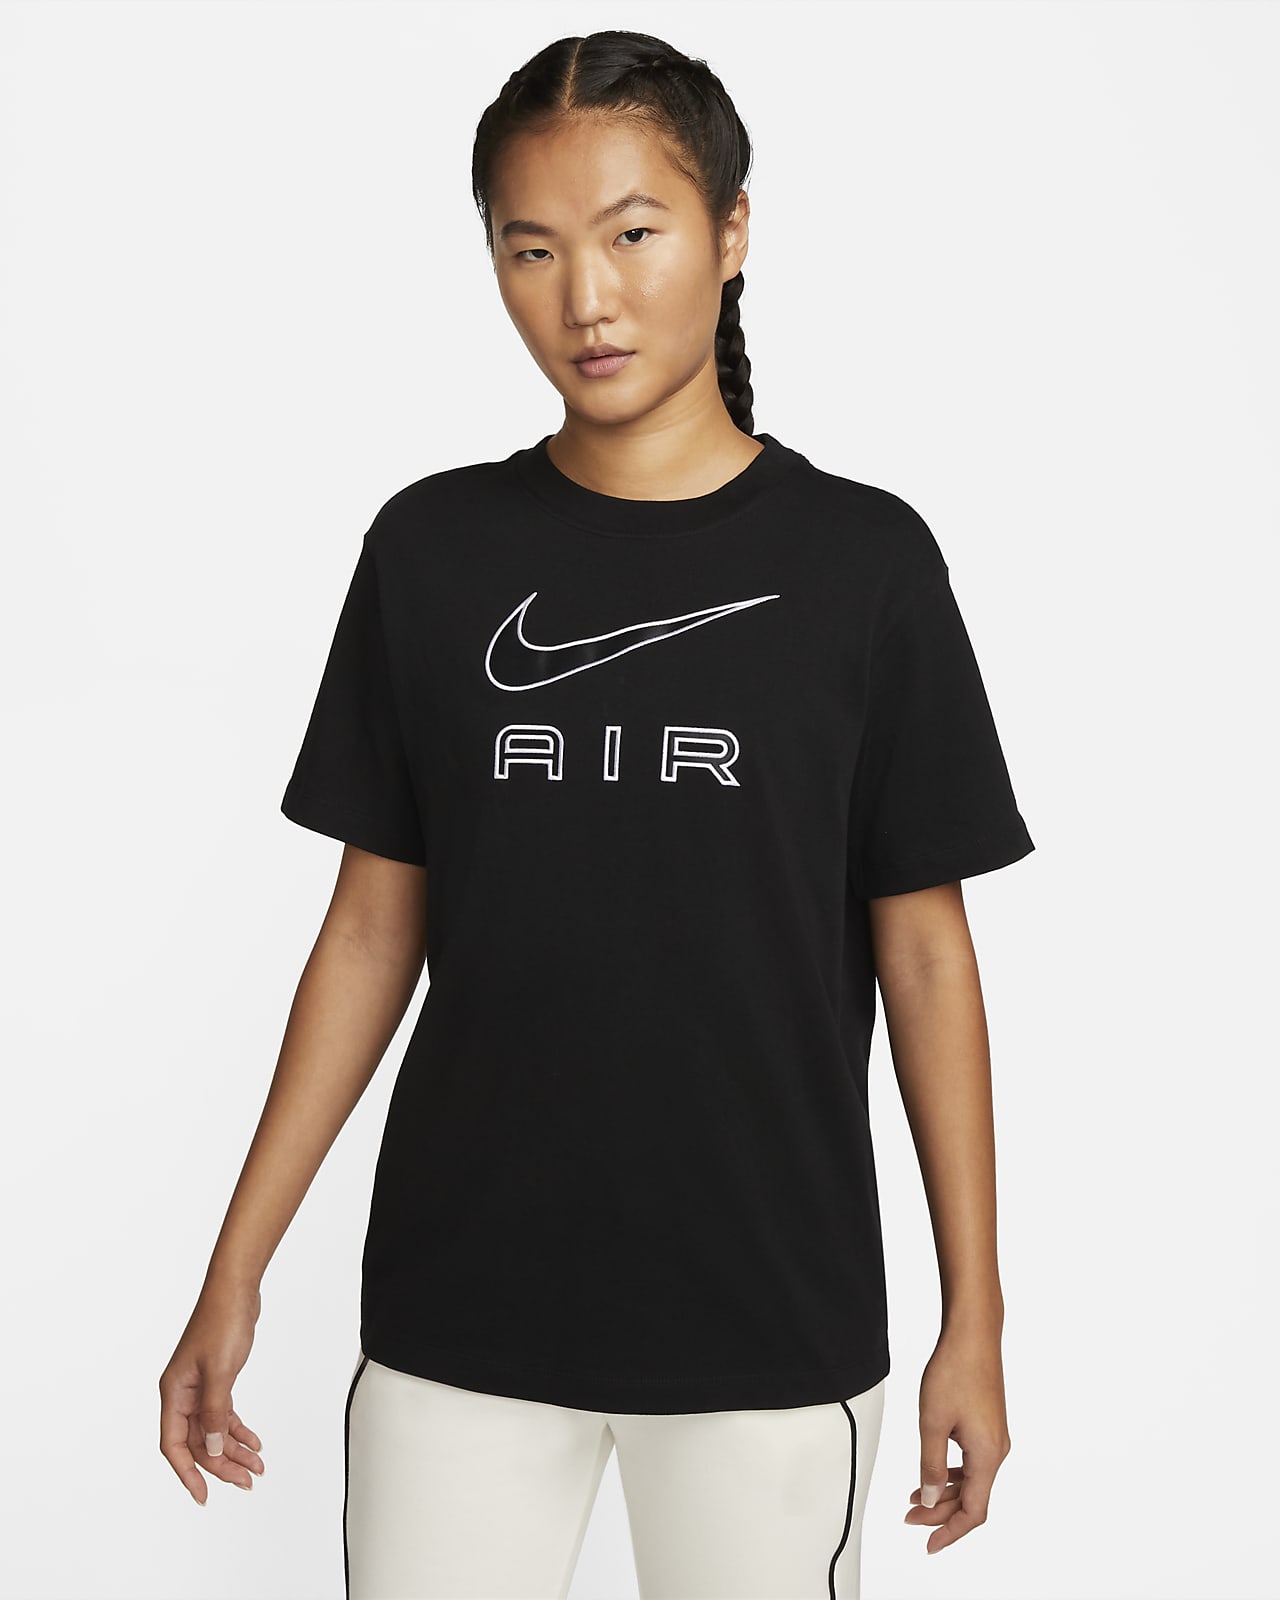 Especificado esconder Oficiales Nike Air Women's T-Shirt. Nike VN